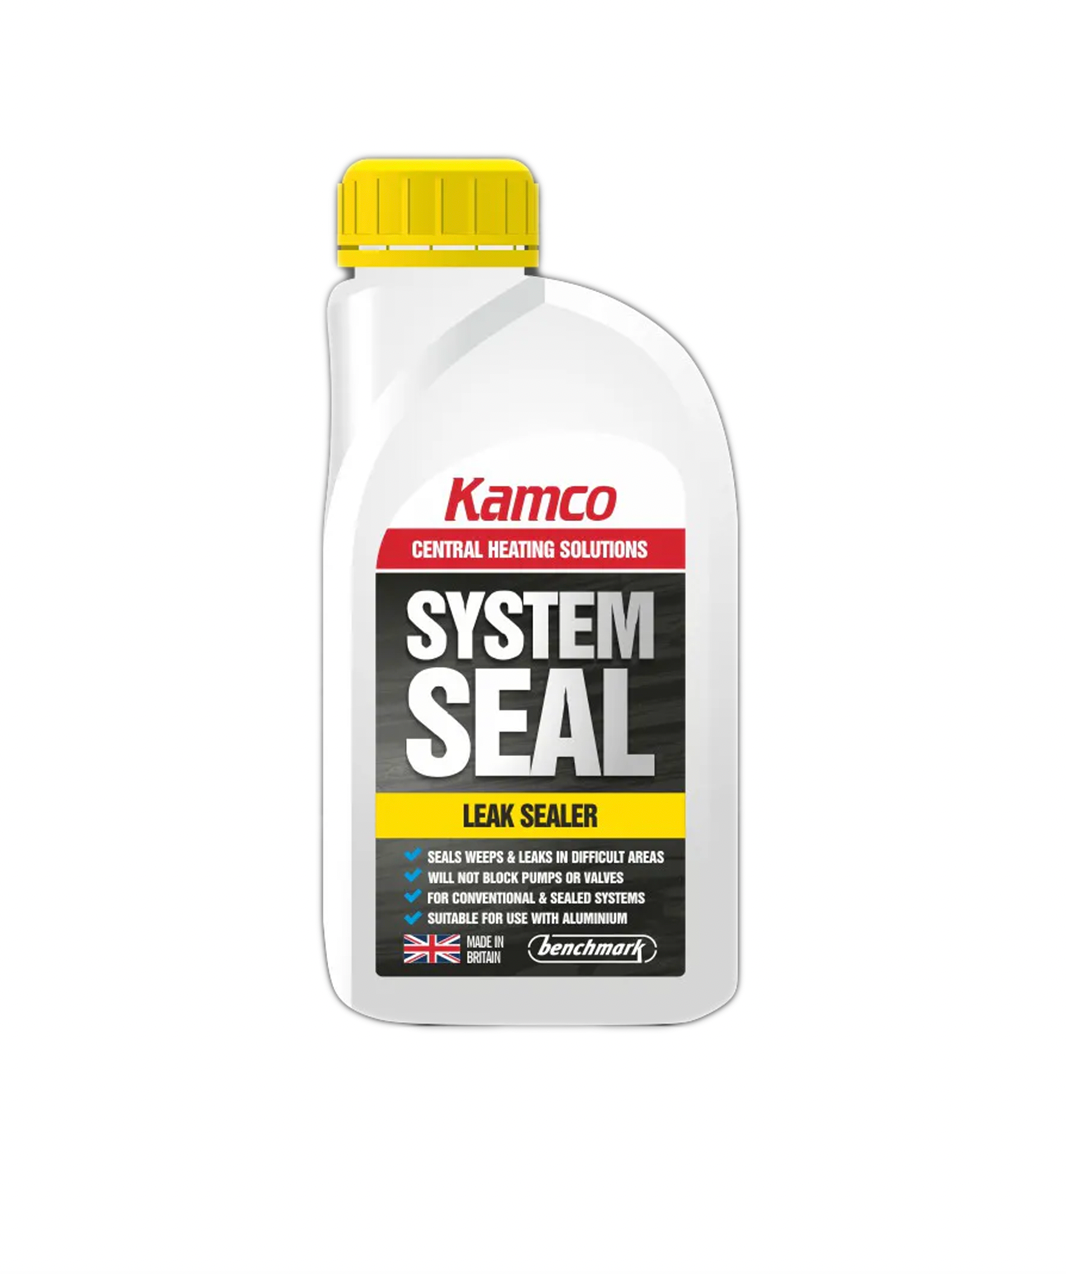 System seal